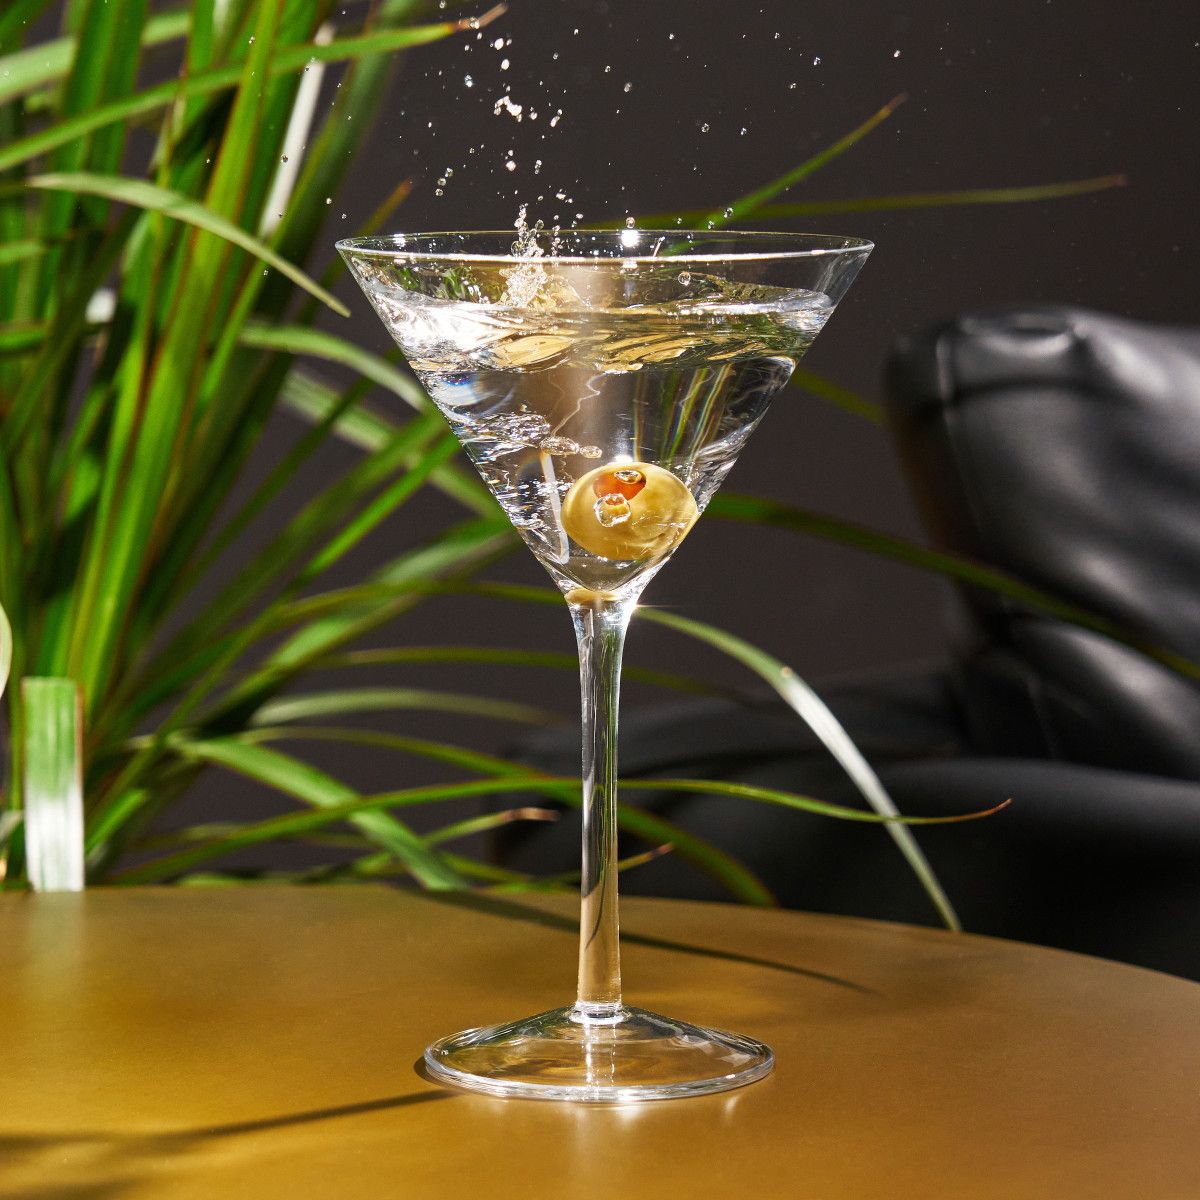 Viski Double Walled Cocktail Glasses - Insulated Martini Glasses